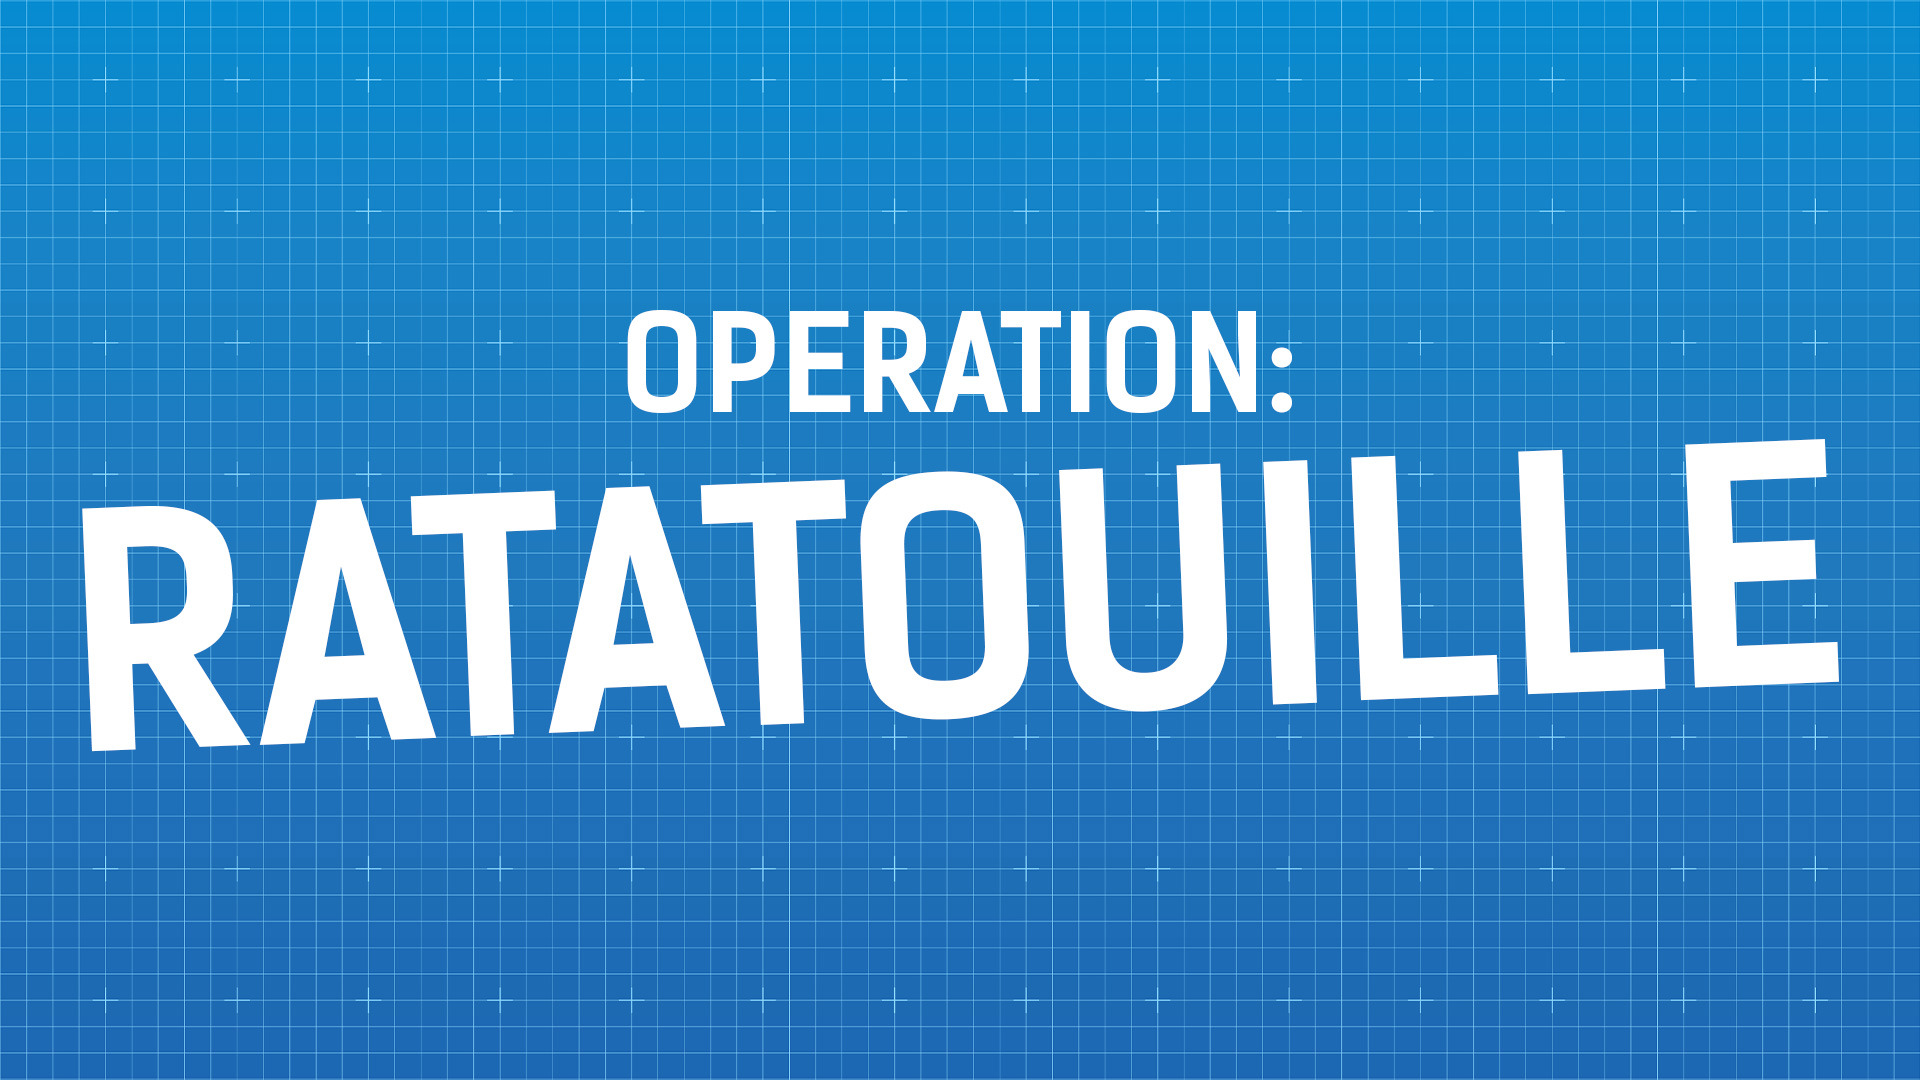 A blueprint for Operation Ratatouille